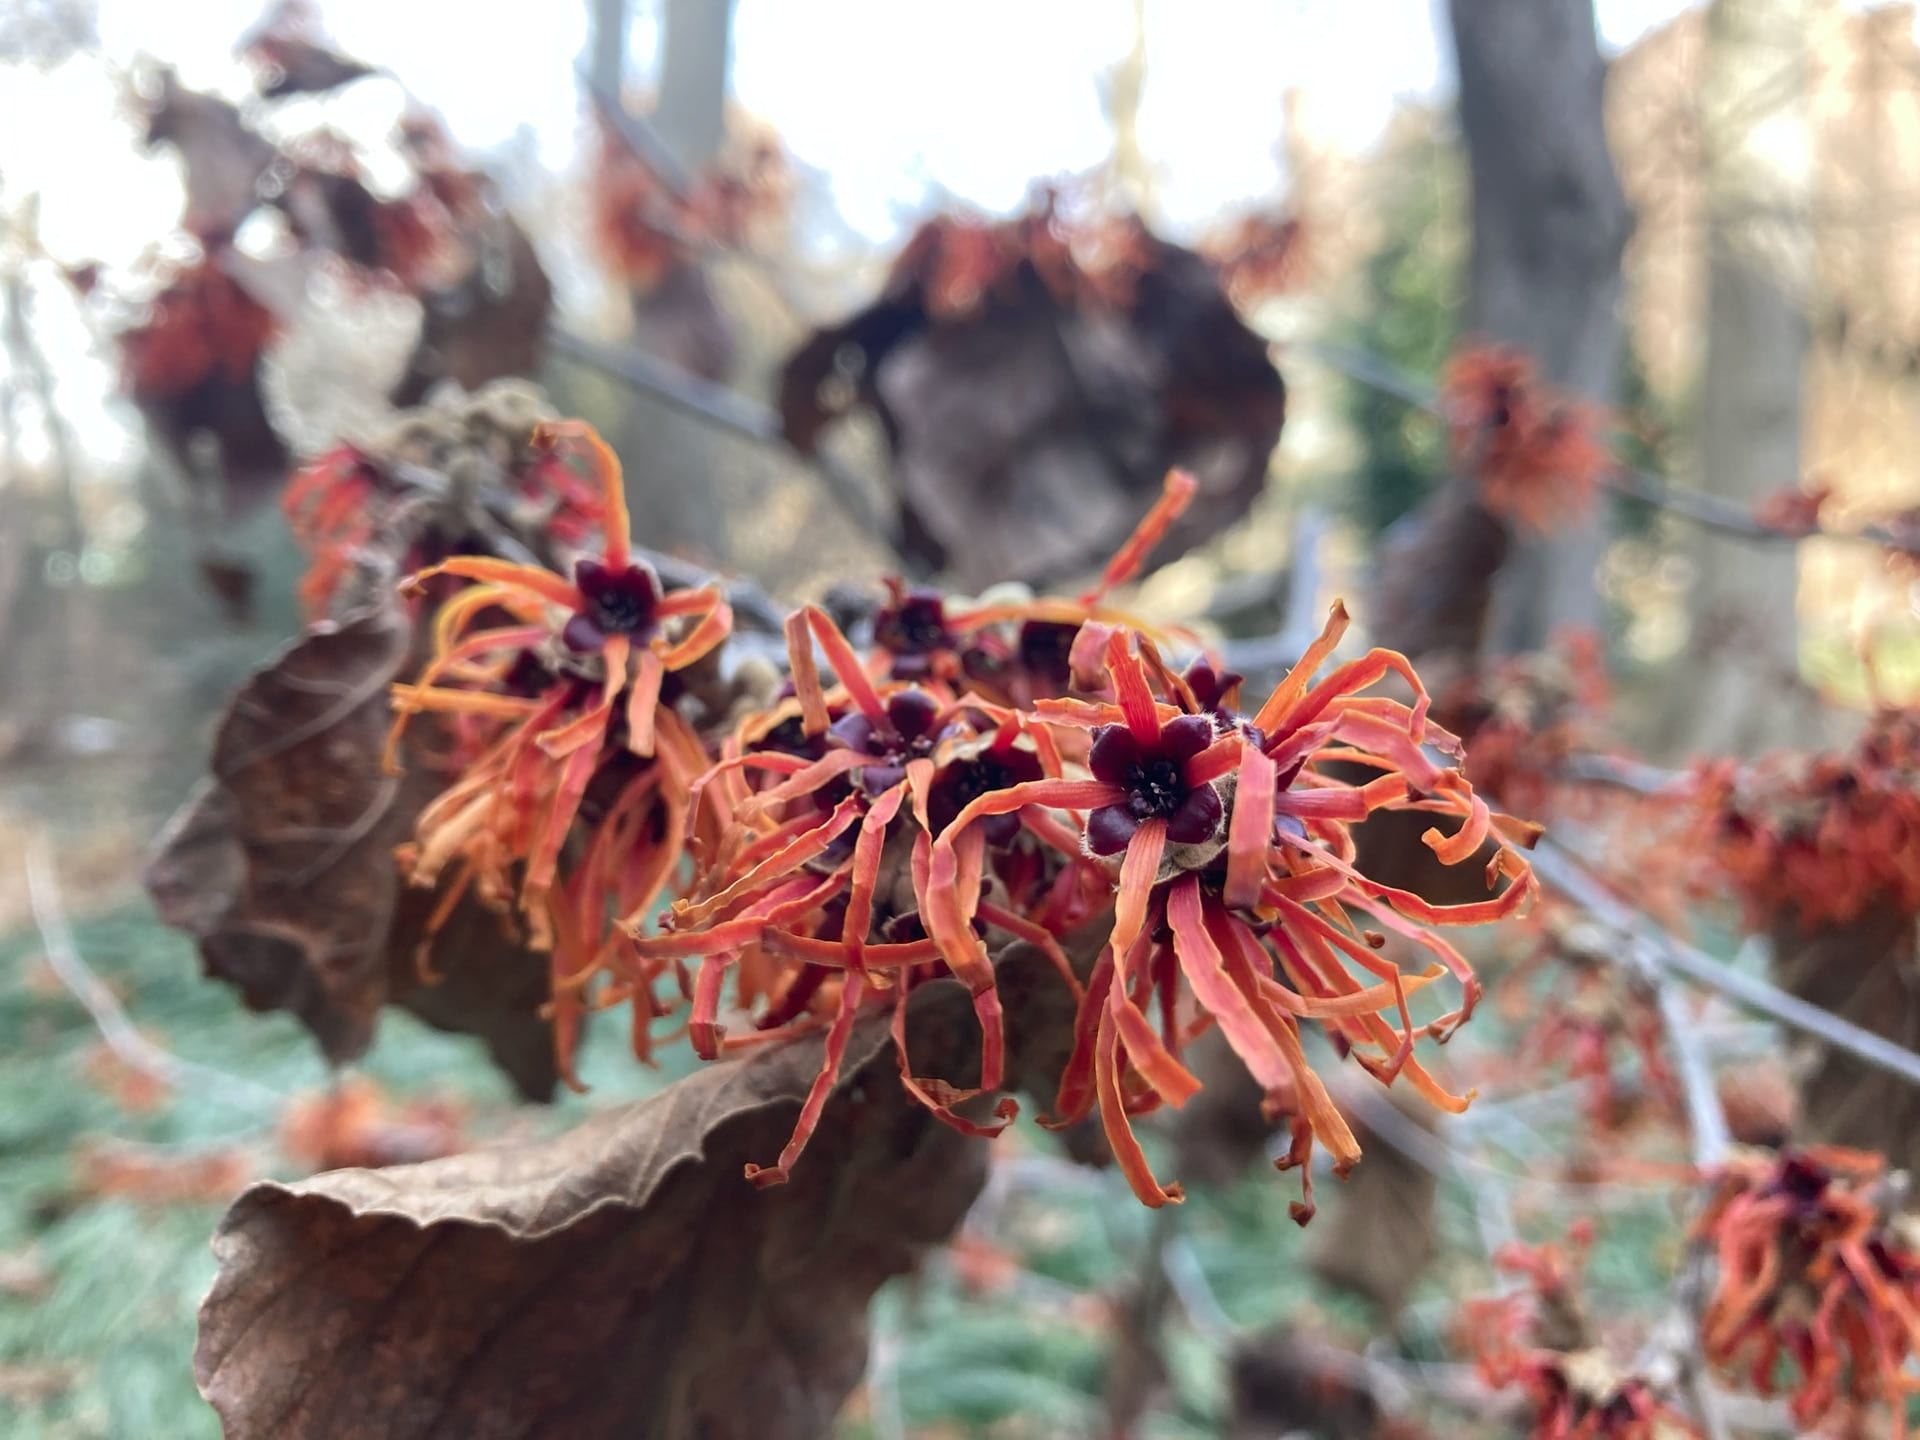 Hamamelis xintermedia 'Jelena' blooms in the winter with ribbon-like red orange petals.